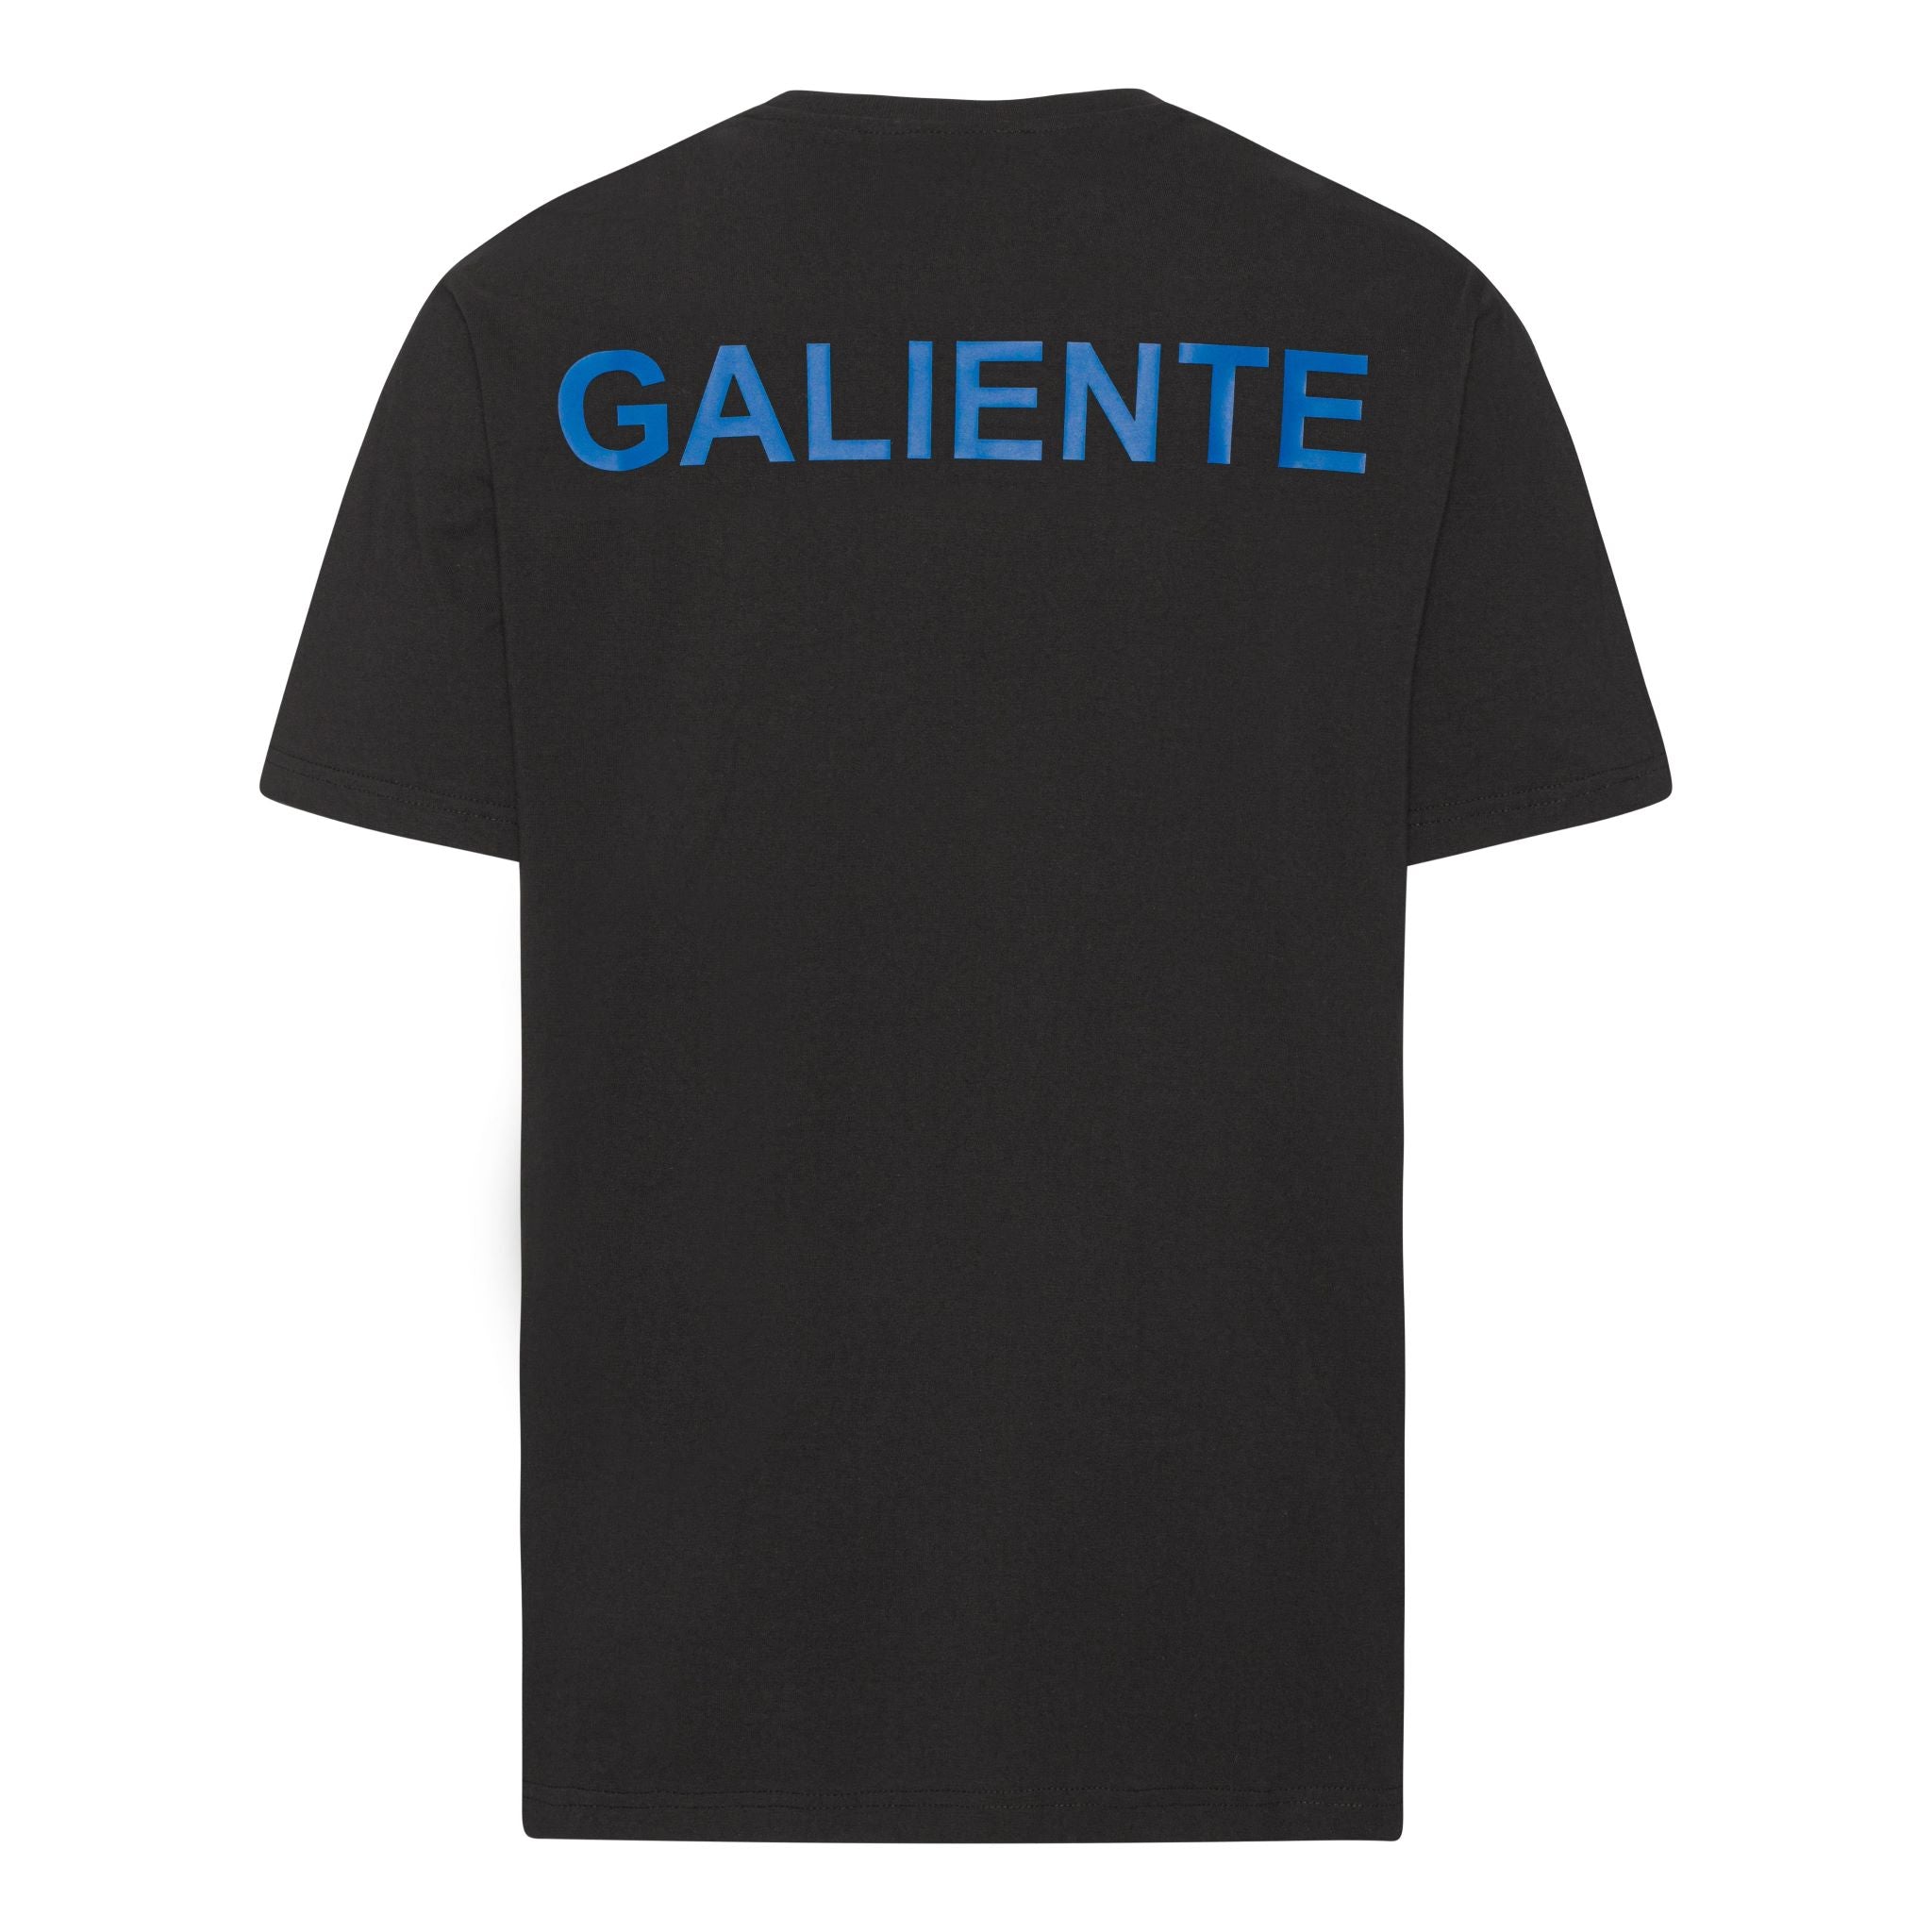 Oversize sort T-shirt med blåt logo print